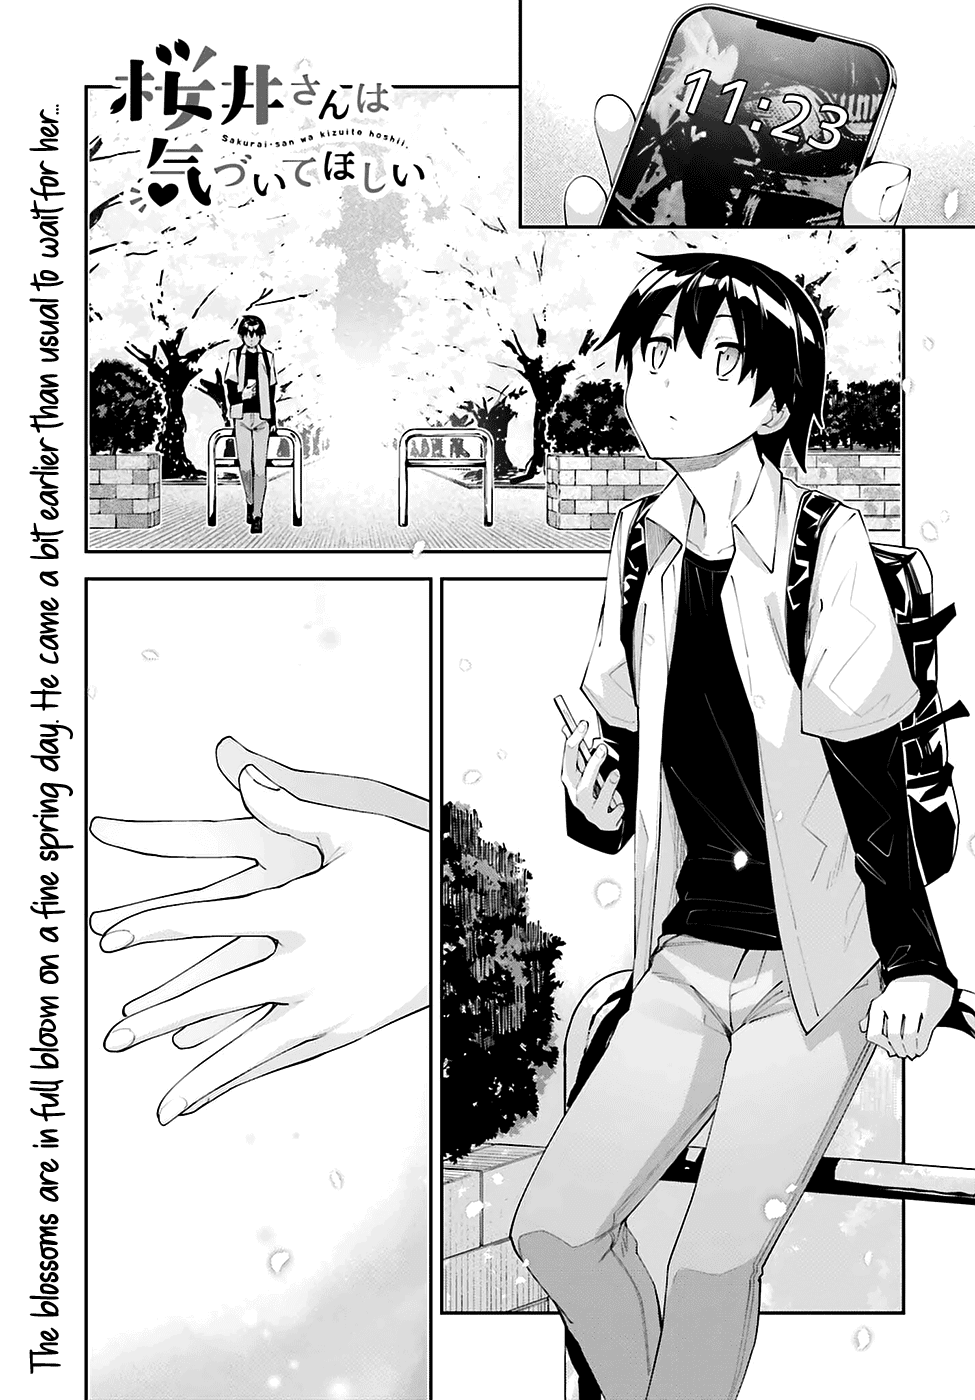 Sakurai-san Wants To Be Noticed - chapter 26 - #3